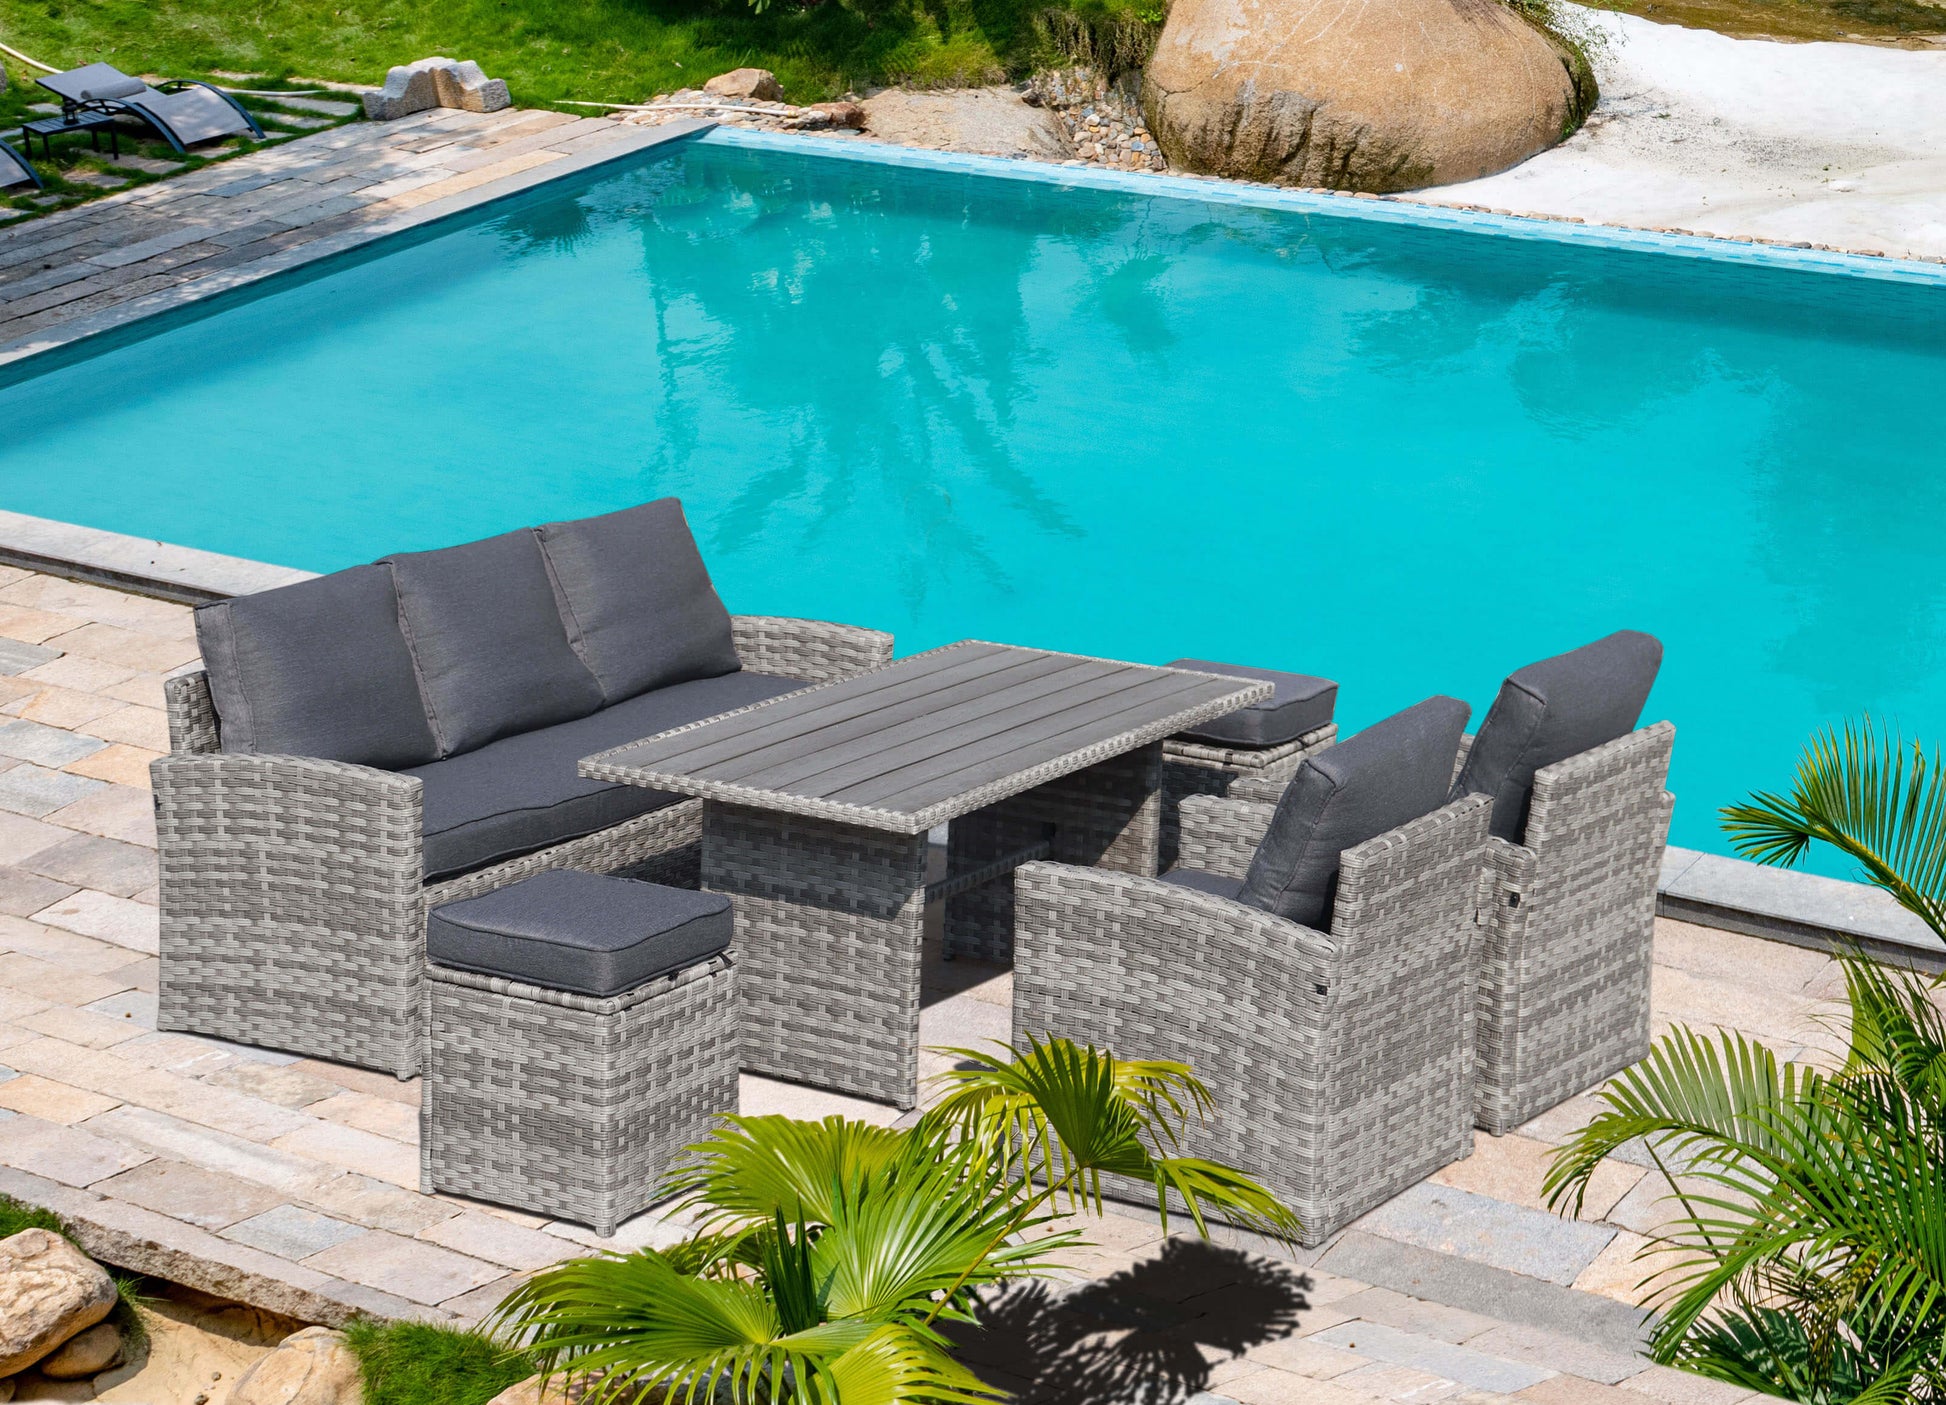 Patio Furniture Sets/Outdoor PE Rattan Sofa Set/Patio Garden Wicker Conversation Sofa/Wicker Rattan Couch with Ottoman, Gray